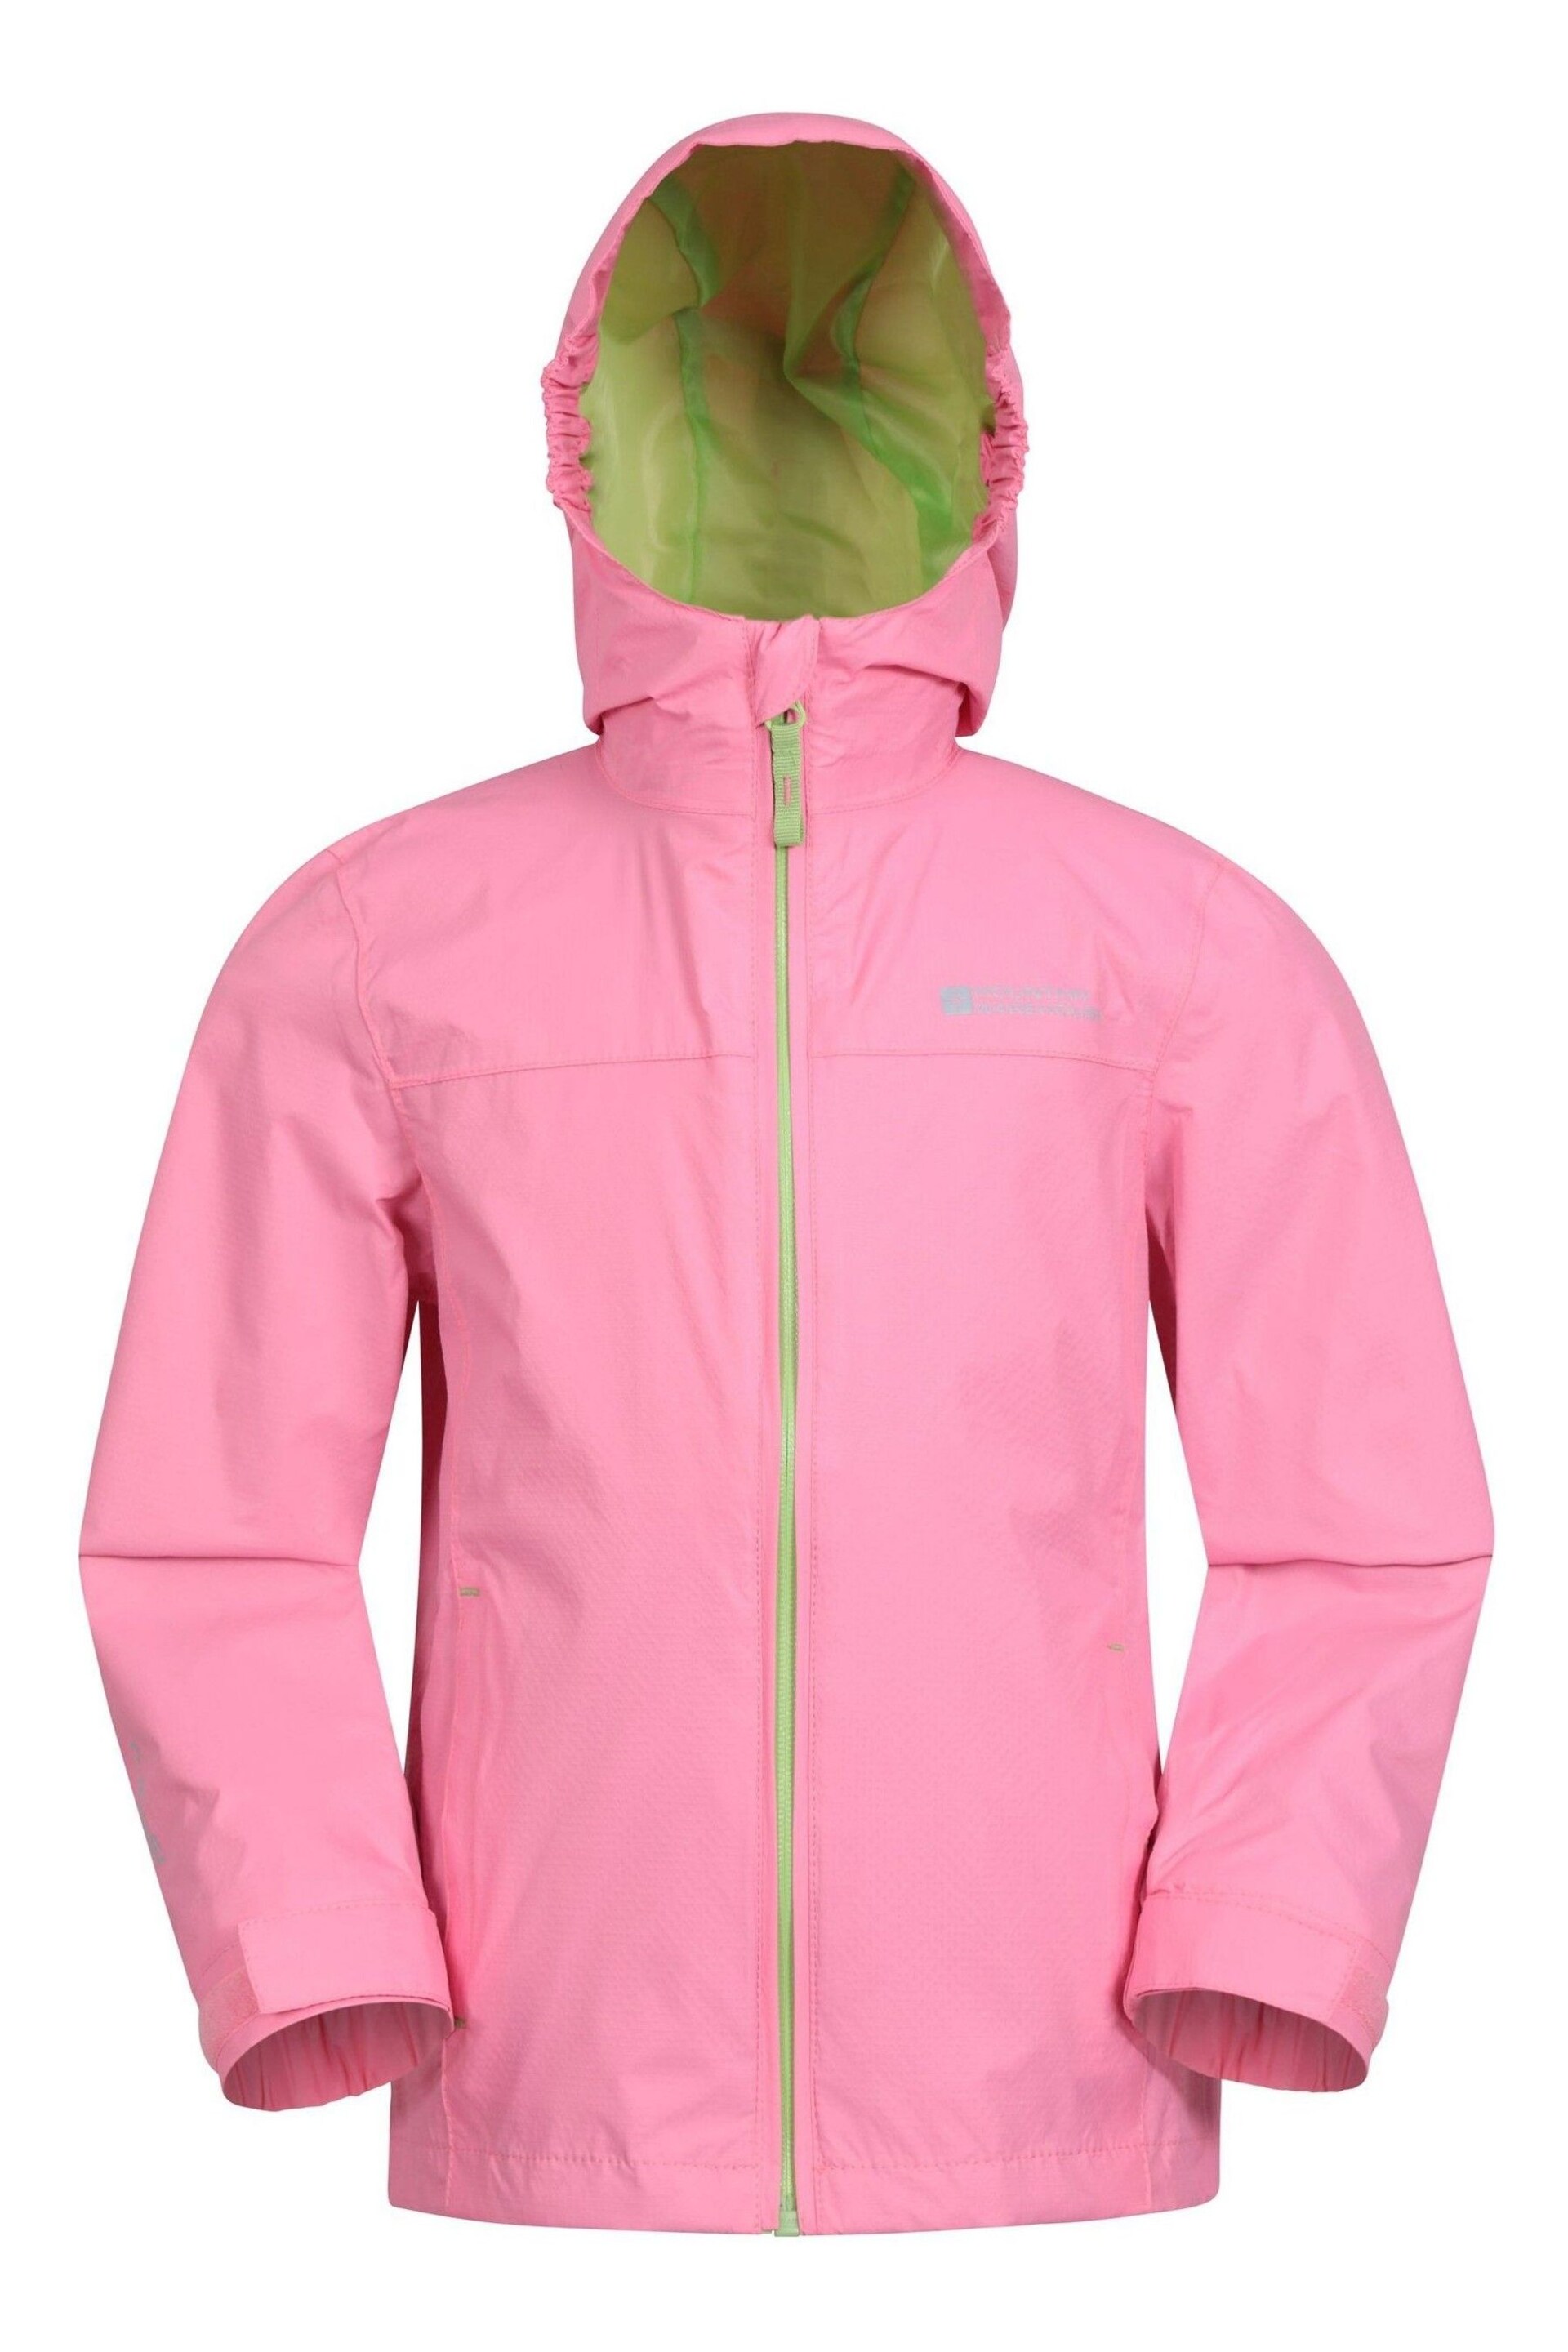 Mountain Warehouse Pink Torrent Waterproof Jacket - Image 1 of 5